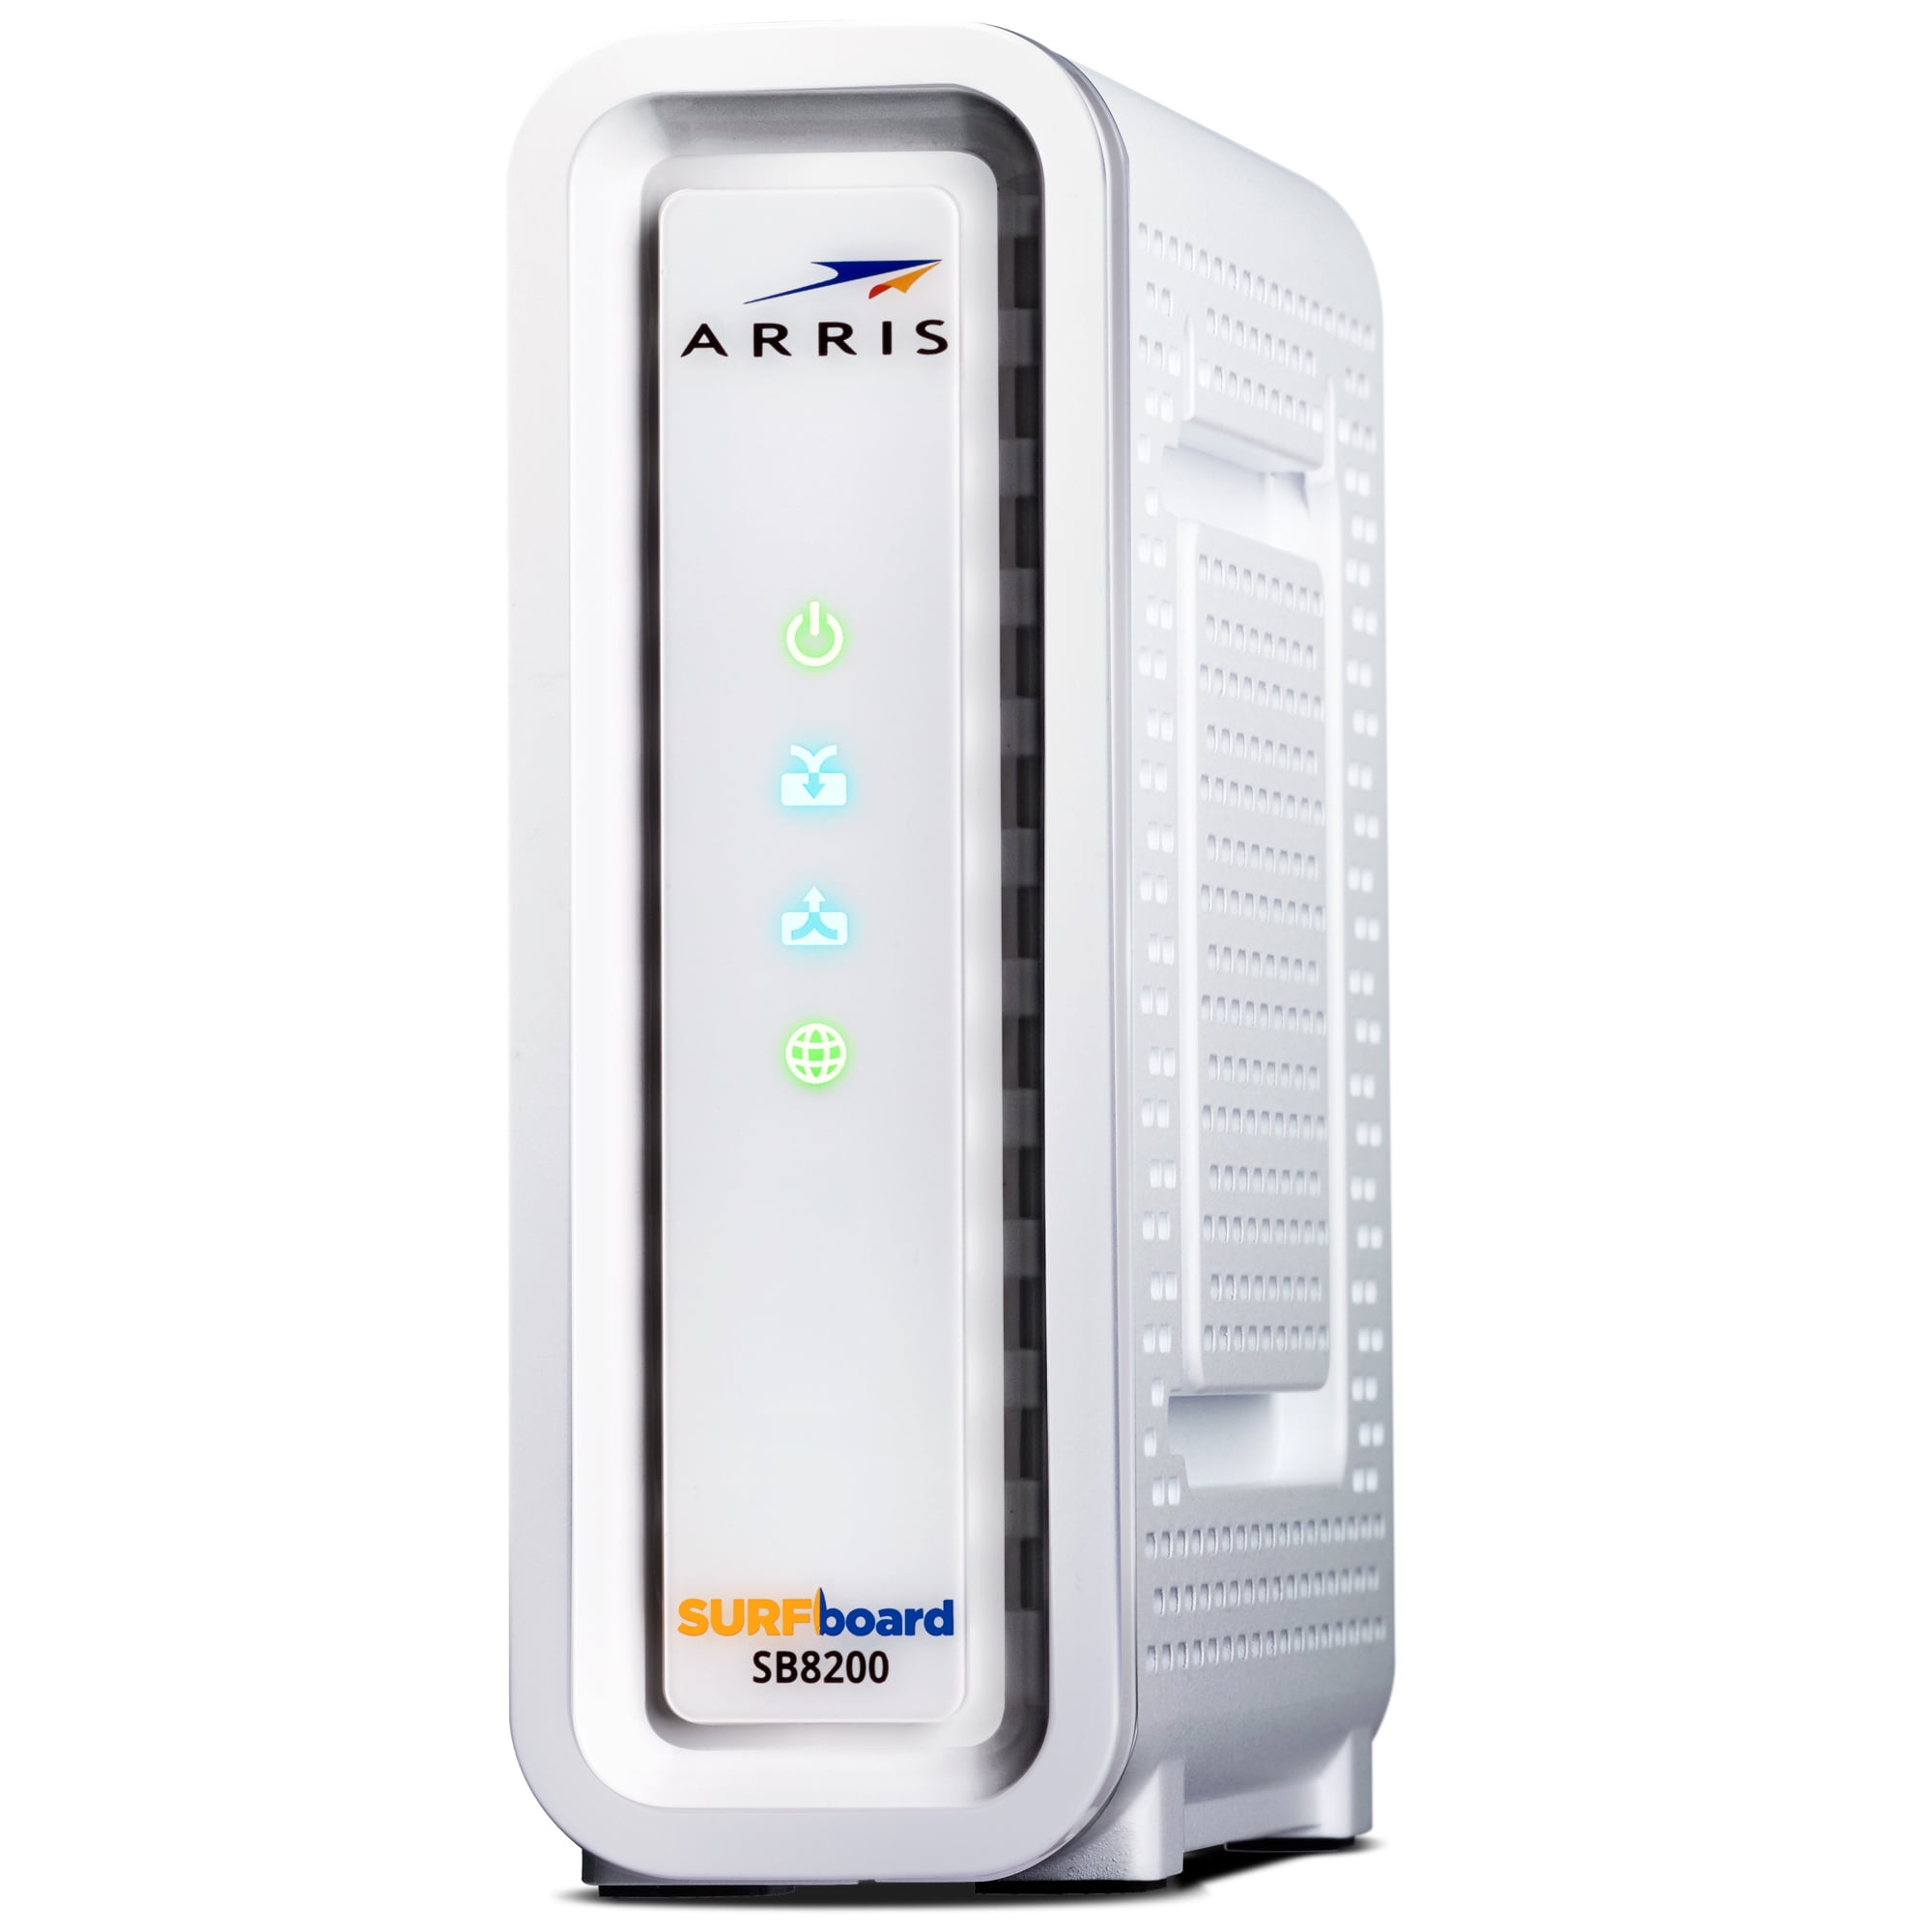 Arris Surfboard Docsis 3 1 Gigabit Cable Modem Approved For Cox Xfinity Spectrum Others Walmart Com Walmart Com